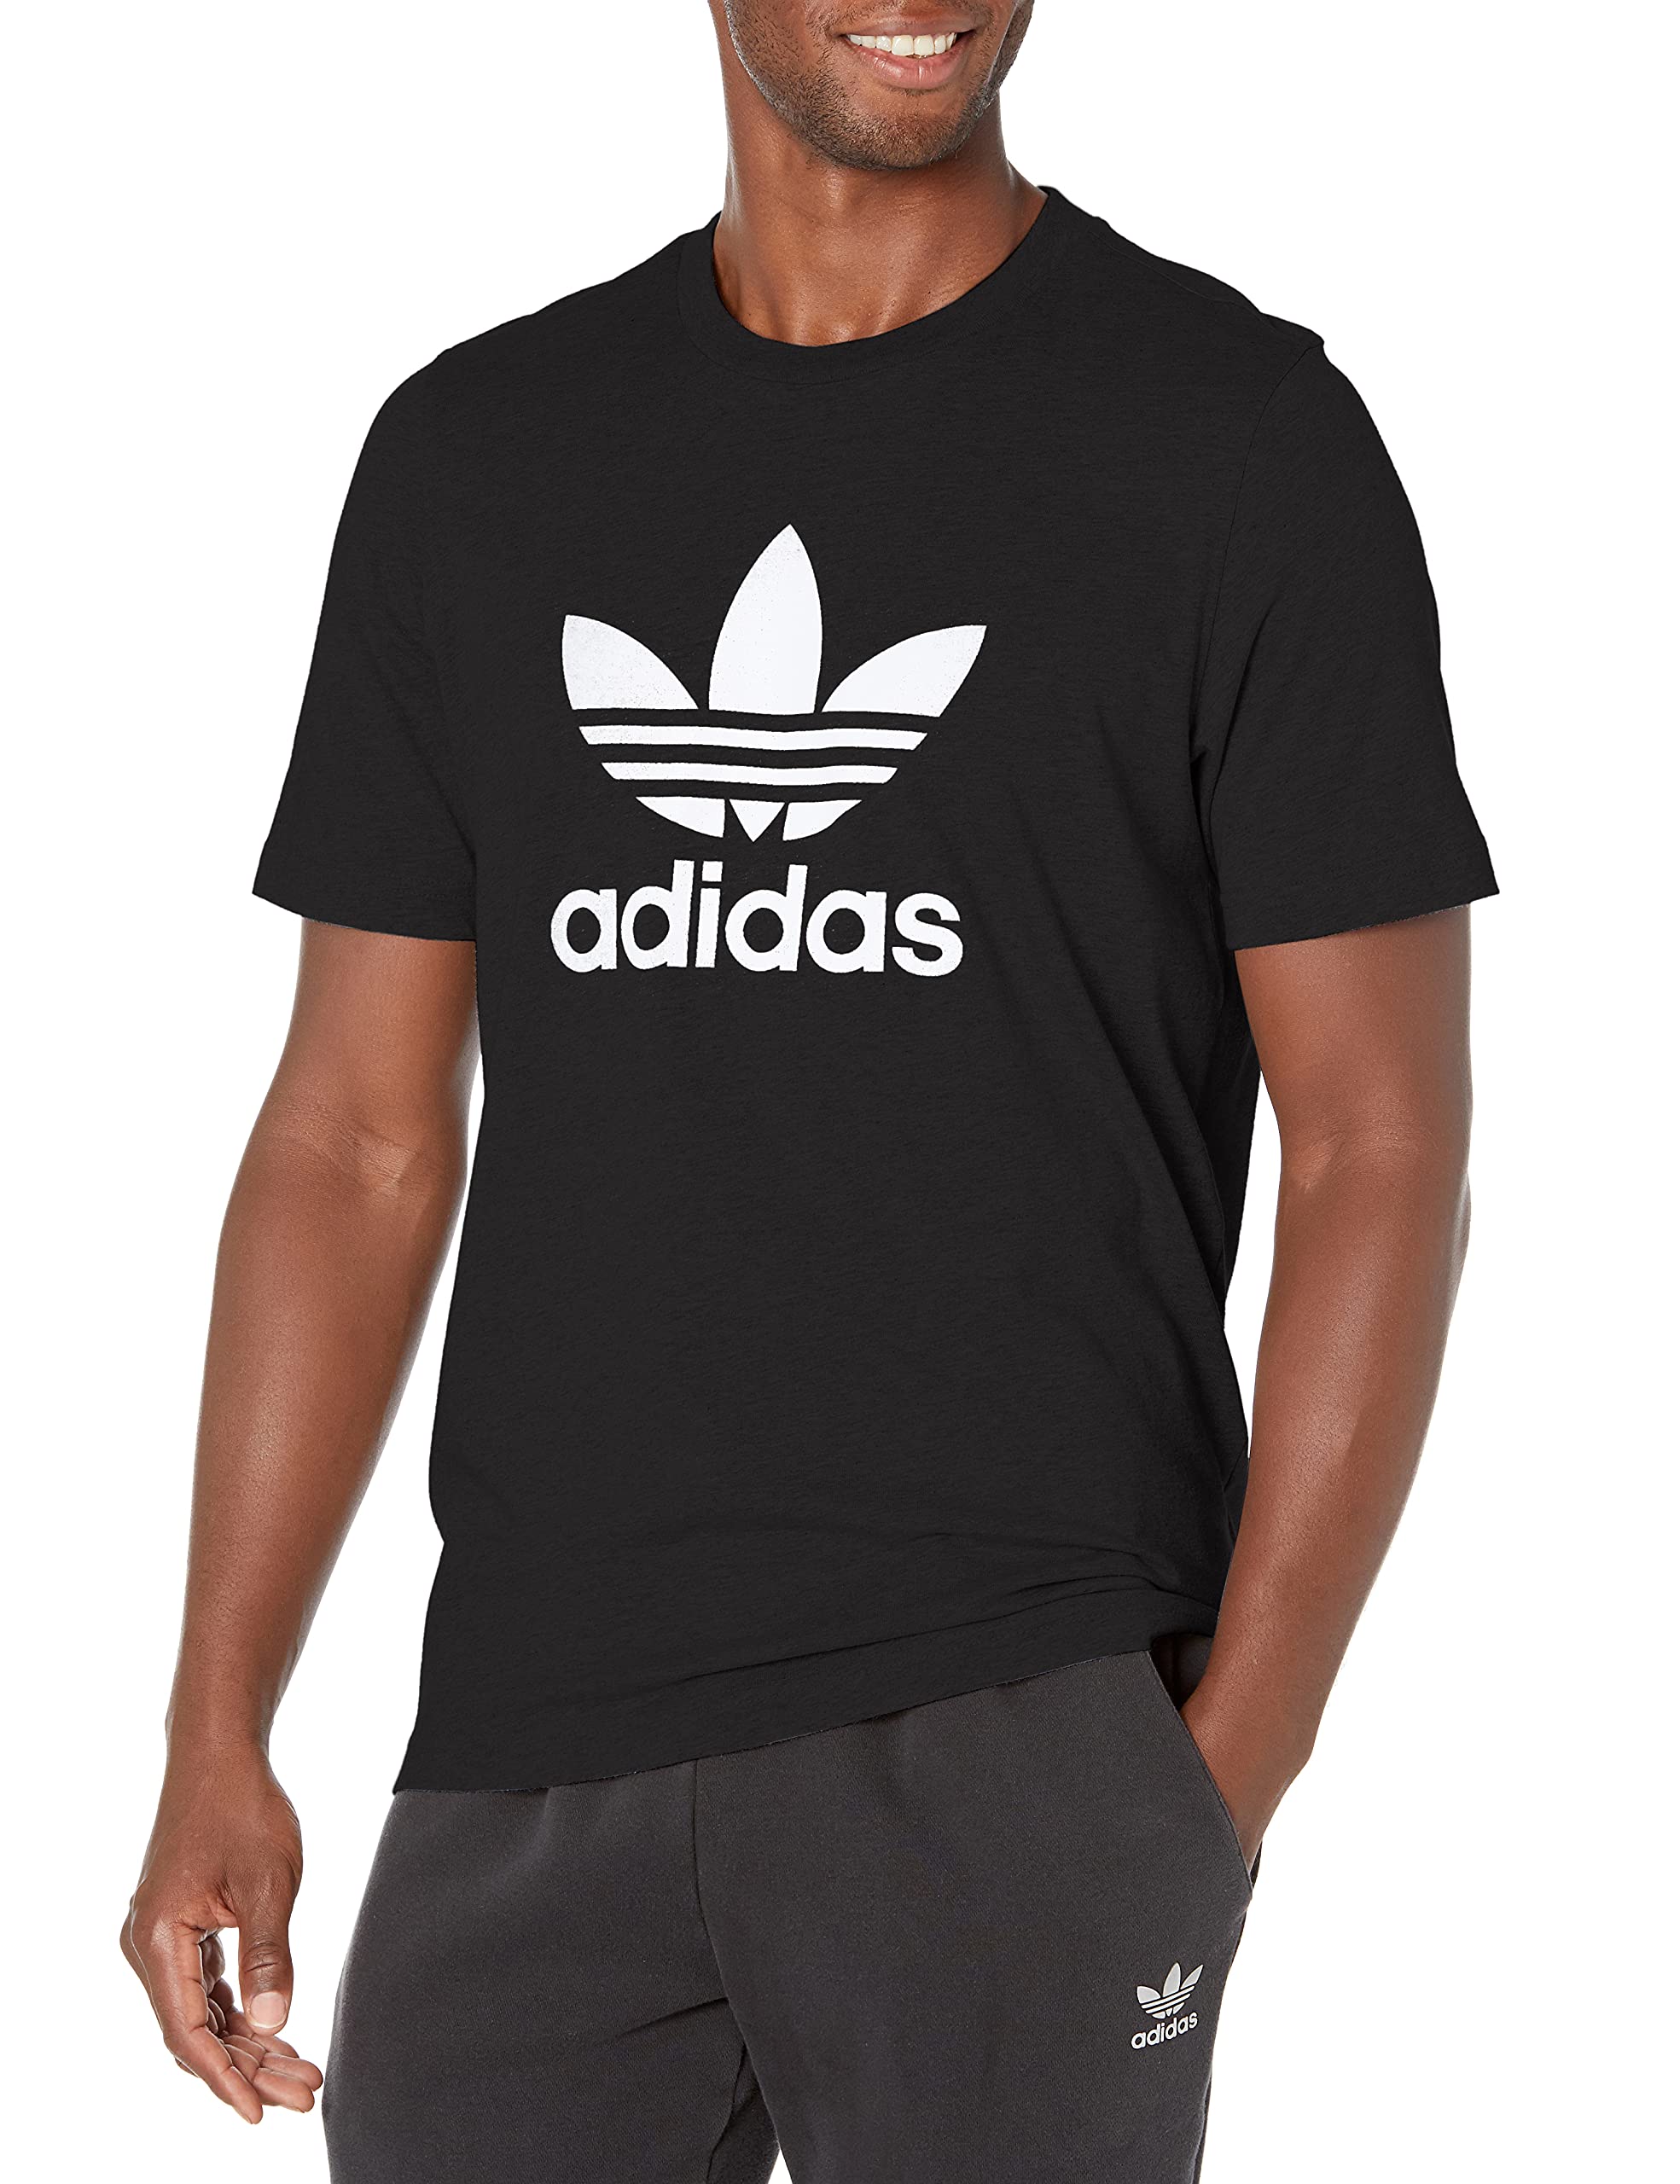 adidas Men's Adicolor Classics Trefoil T-shirt: Medium Grey Heather/White (16" Neck) $8.60, Black/White (14" Neck) $10.40 + Free Shipping w/ Prime or on $25+